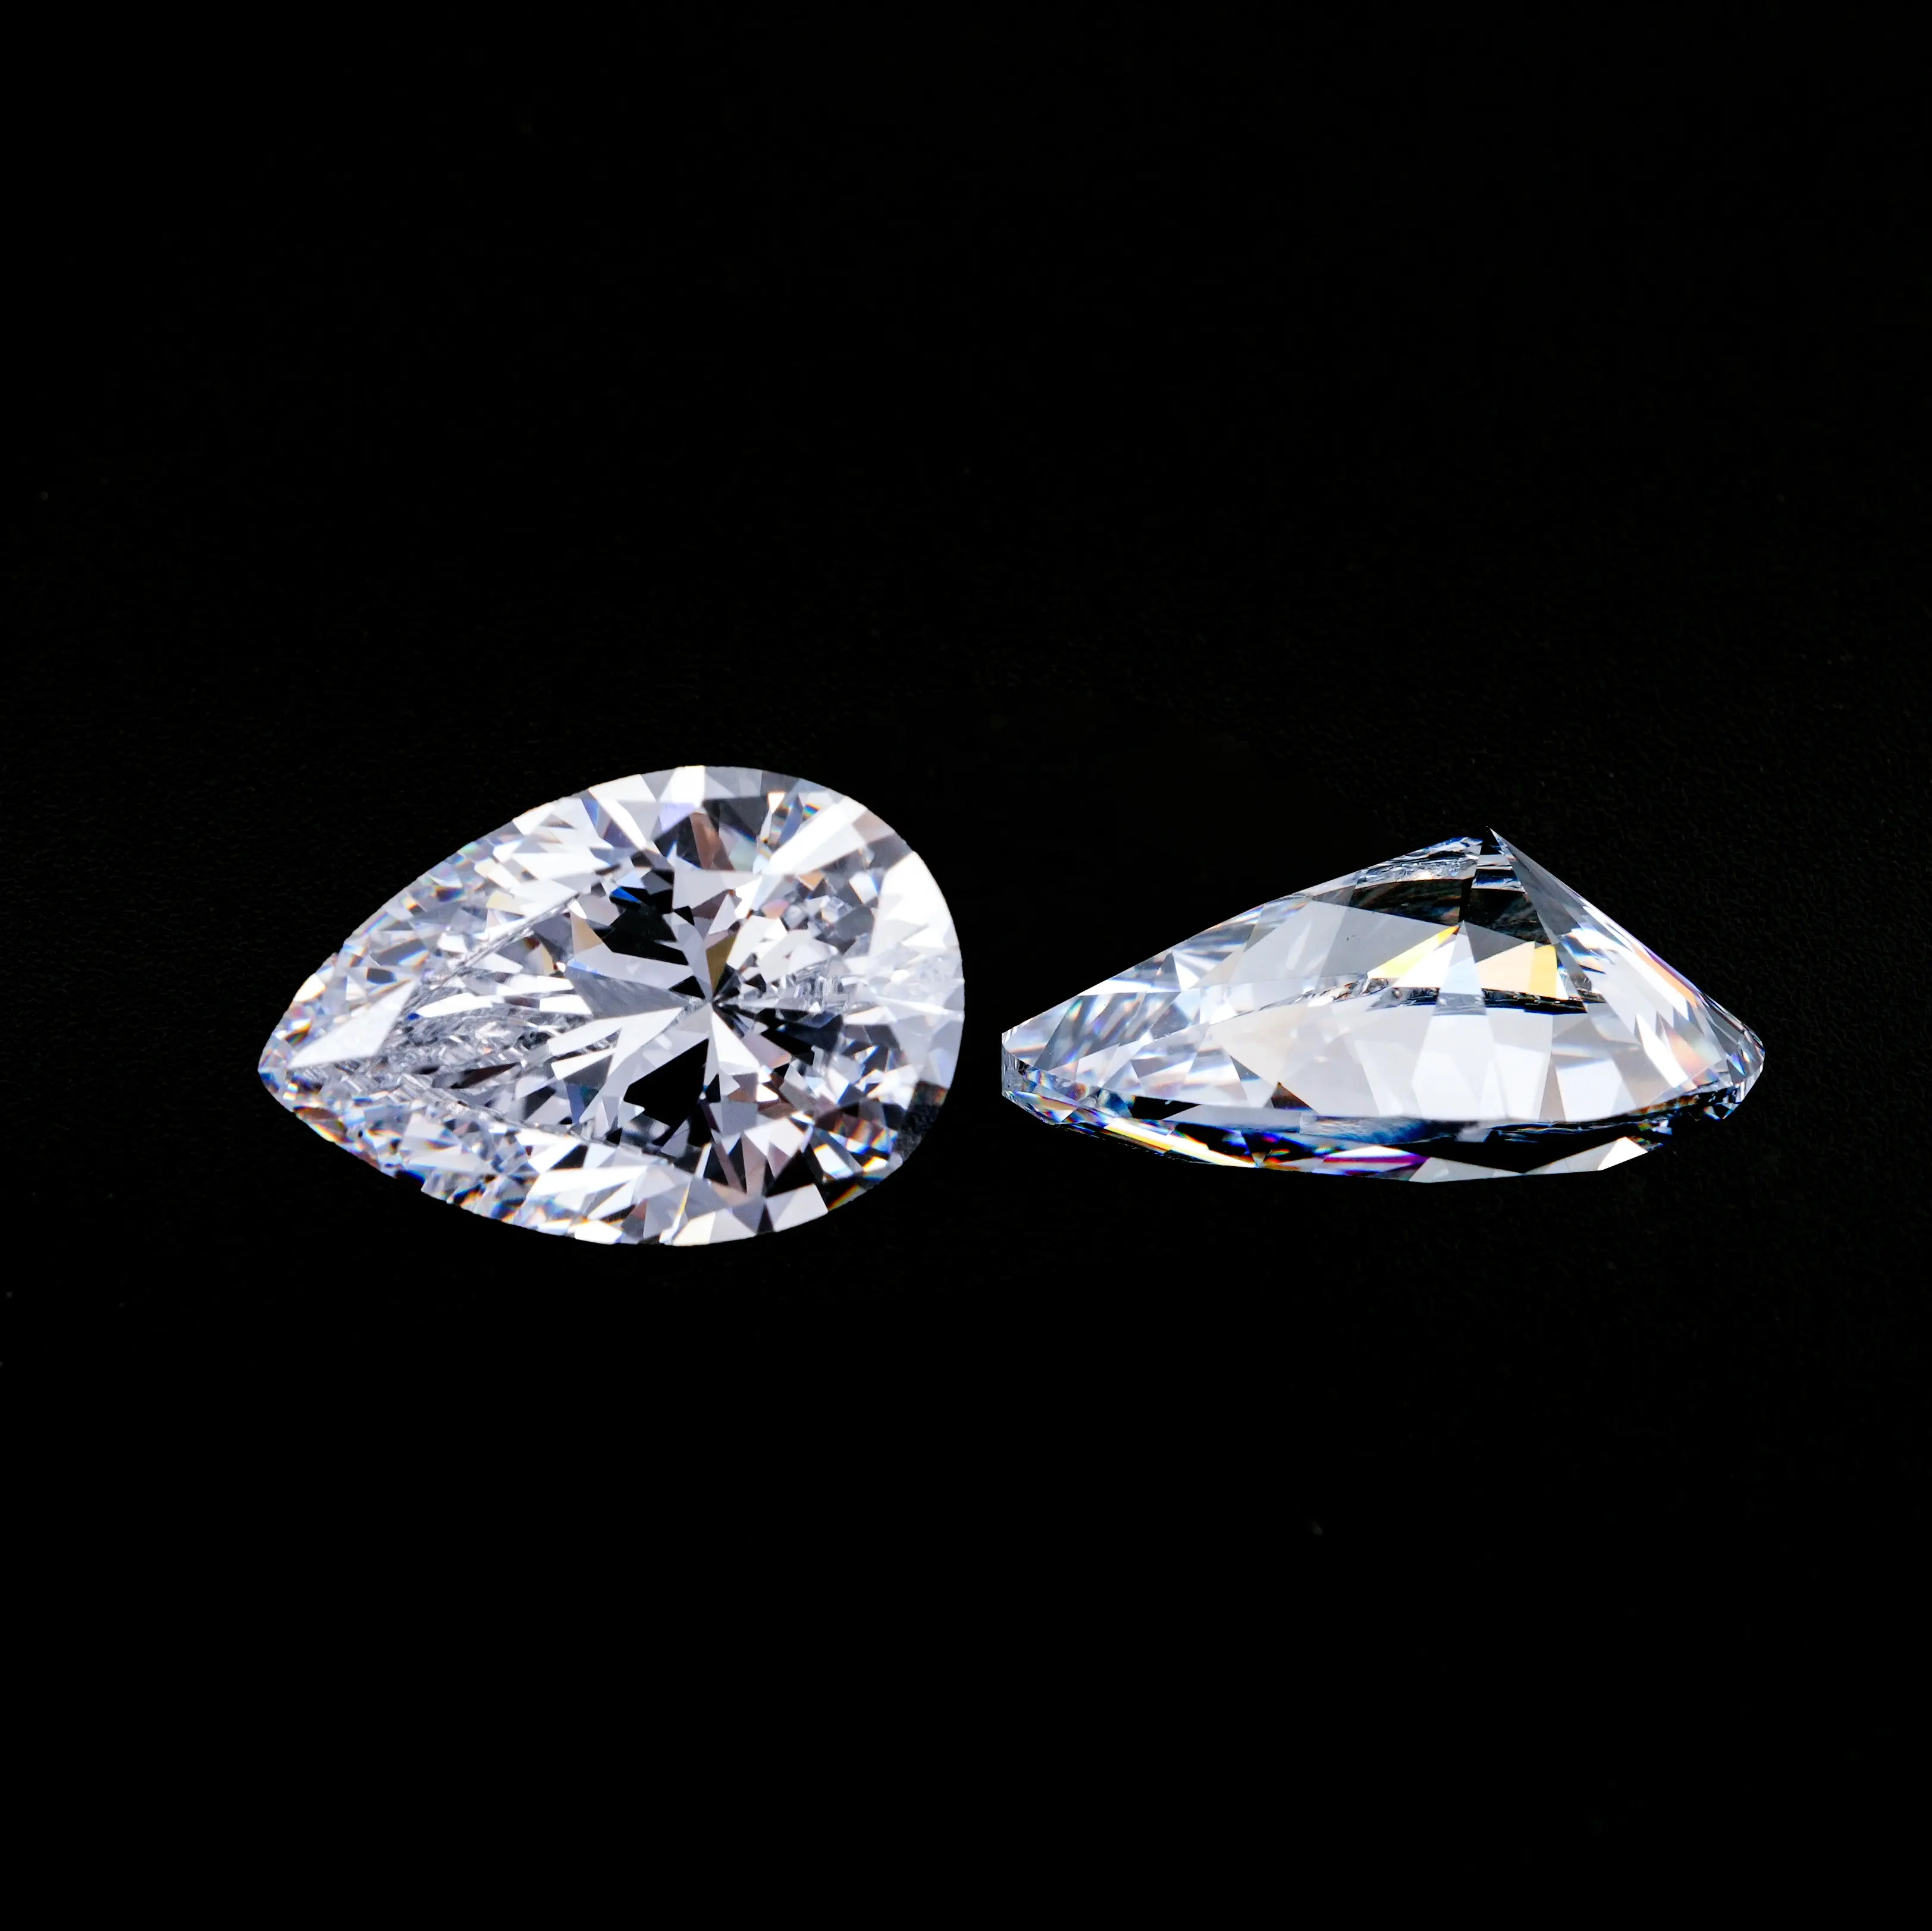 Retail price zircon gemstones pear cubic zirconia 5a white cubic zirconia stone